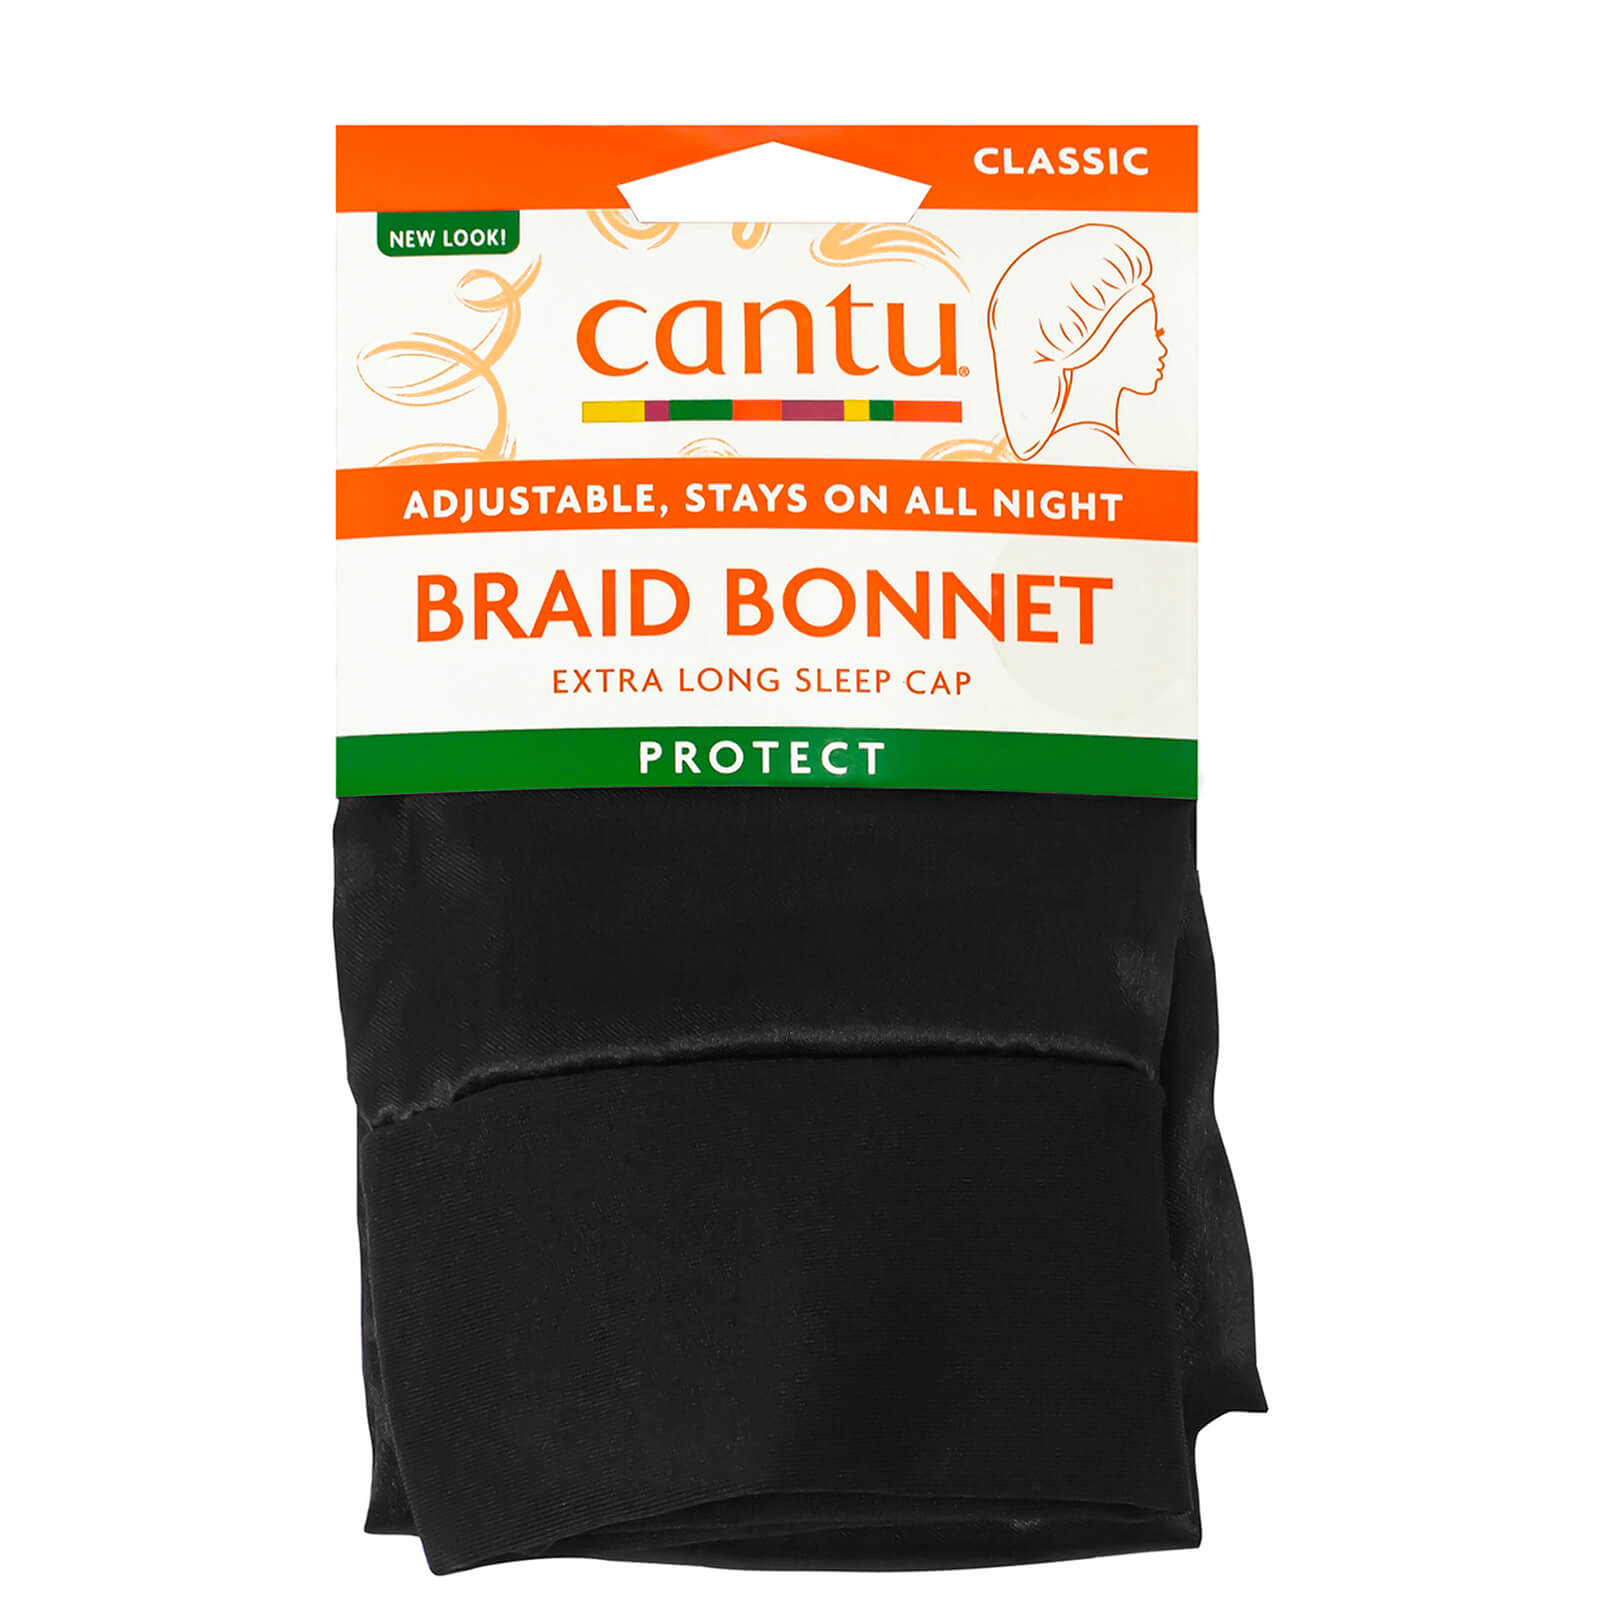 Image of Cantu Braid Bonnet - Classic